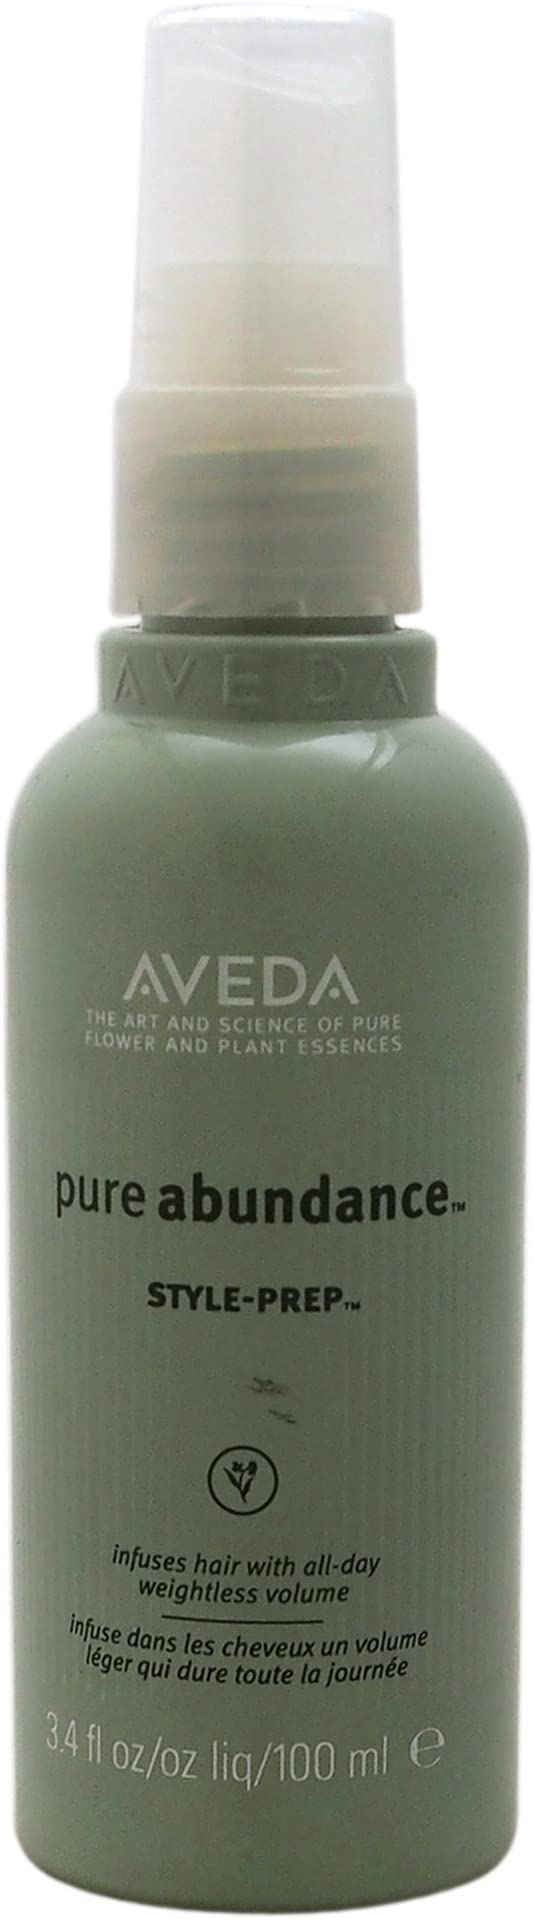 PURE ABUNDANCE Style-Prep 100 ml